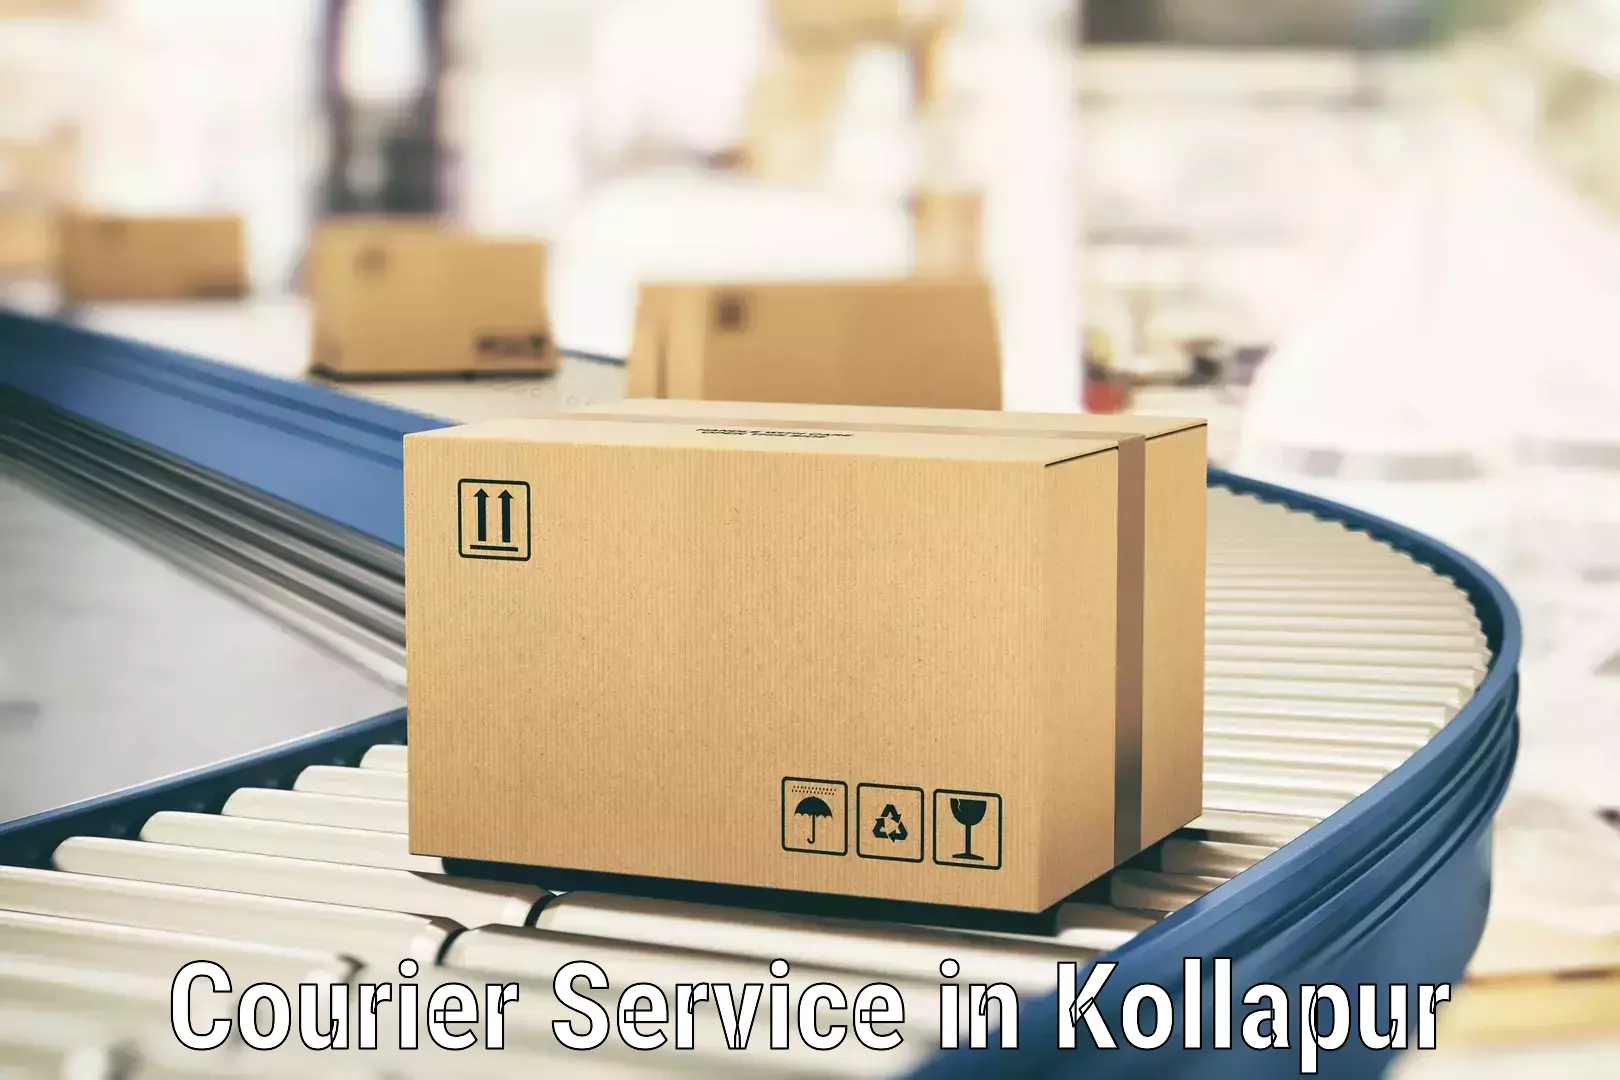 Punctual parcel services in Kollapur